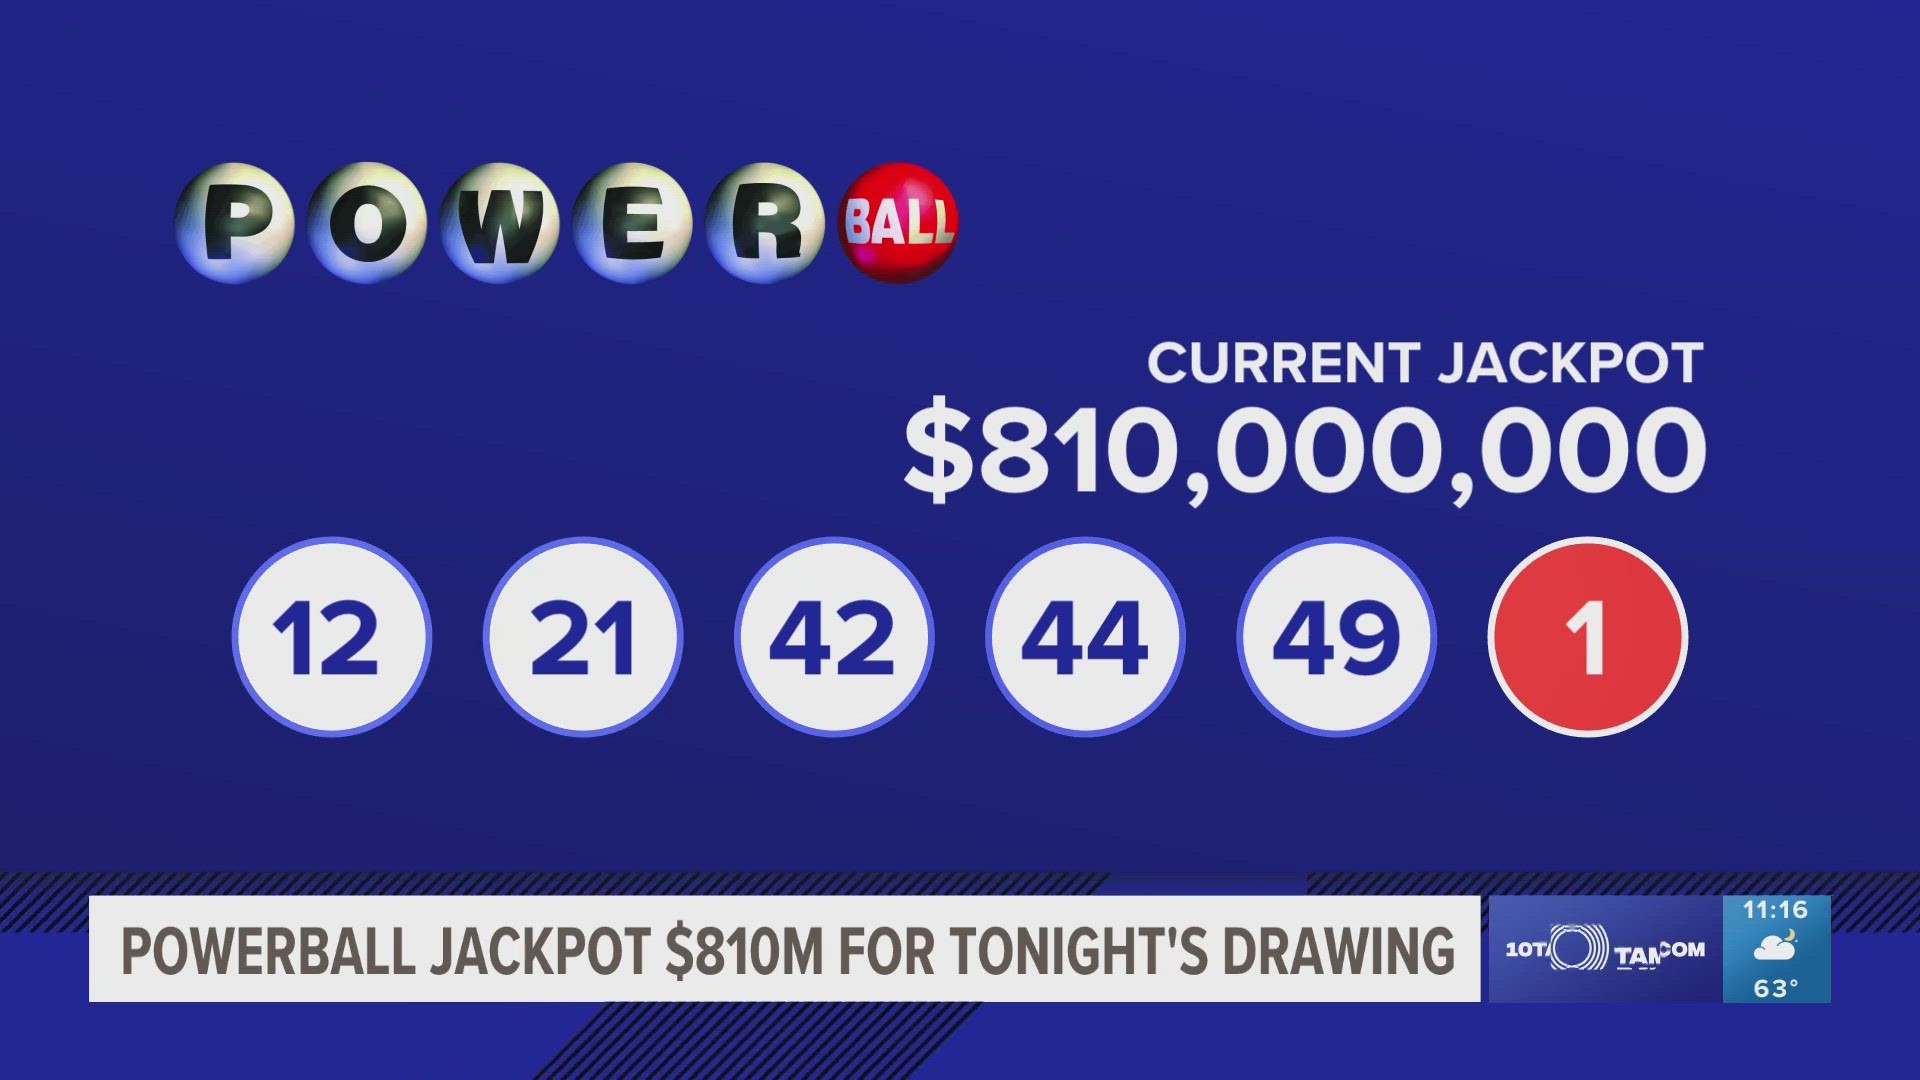 Powerball hasn't seen a jackpot winner since Oct. 11, when a single ticket in California took home a $1.76 billion prize.